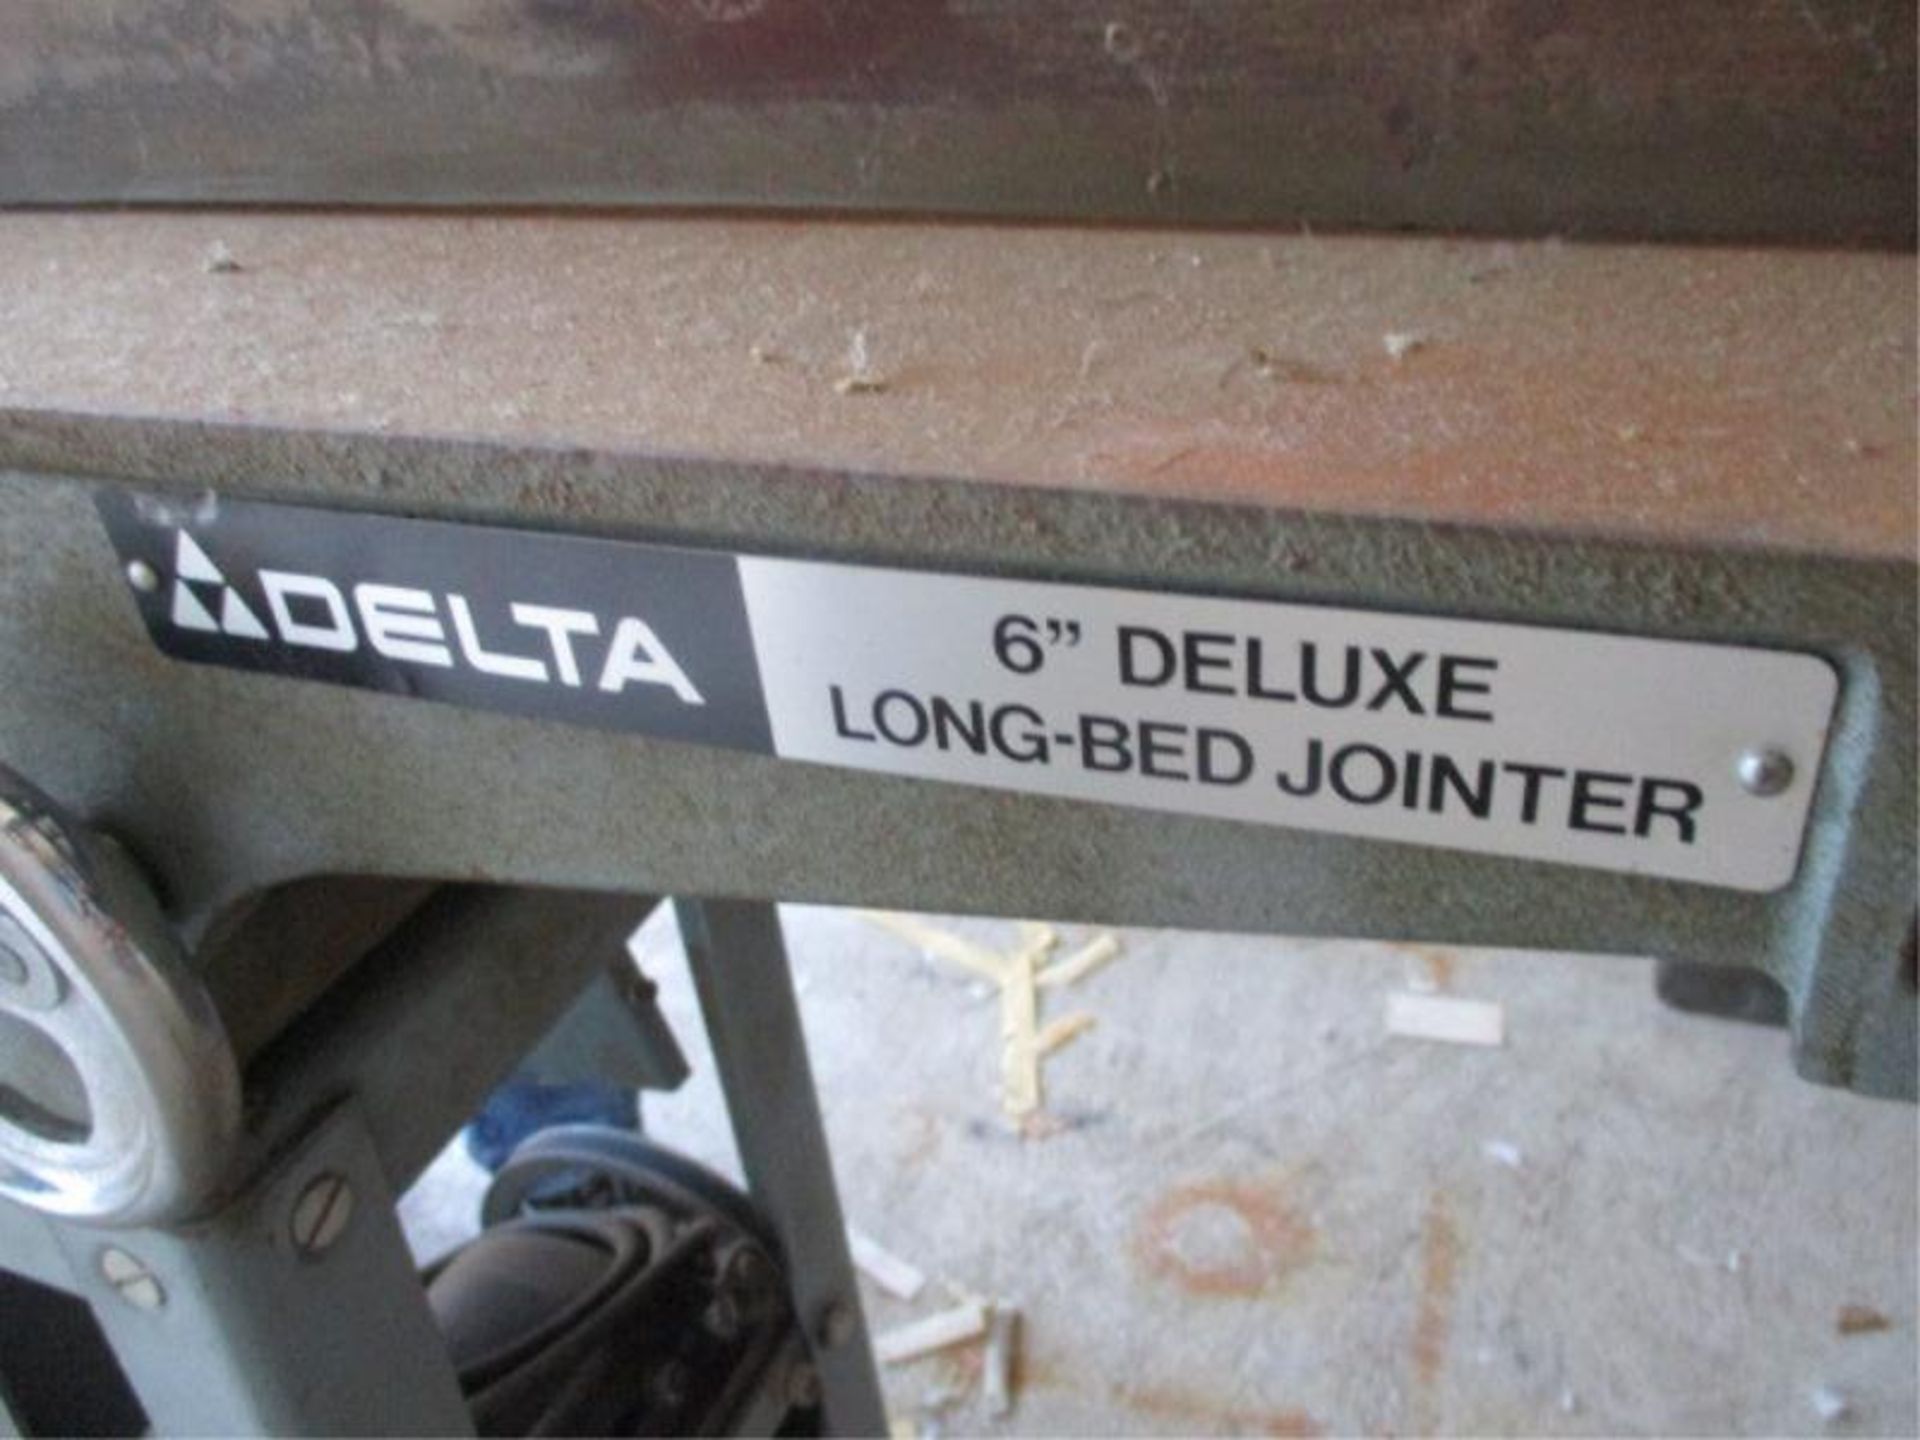 Delta Deluxe Long Bed Jointer, Model: 37-220, 110 Volt - Image 4 of 5